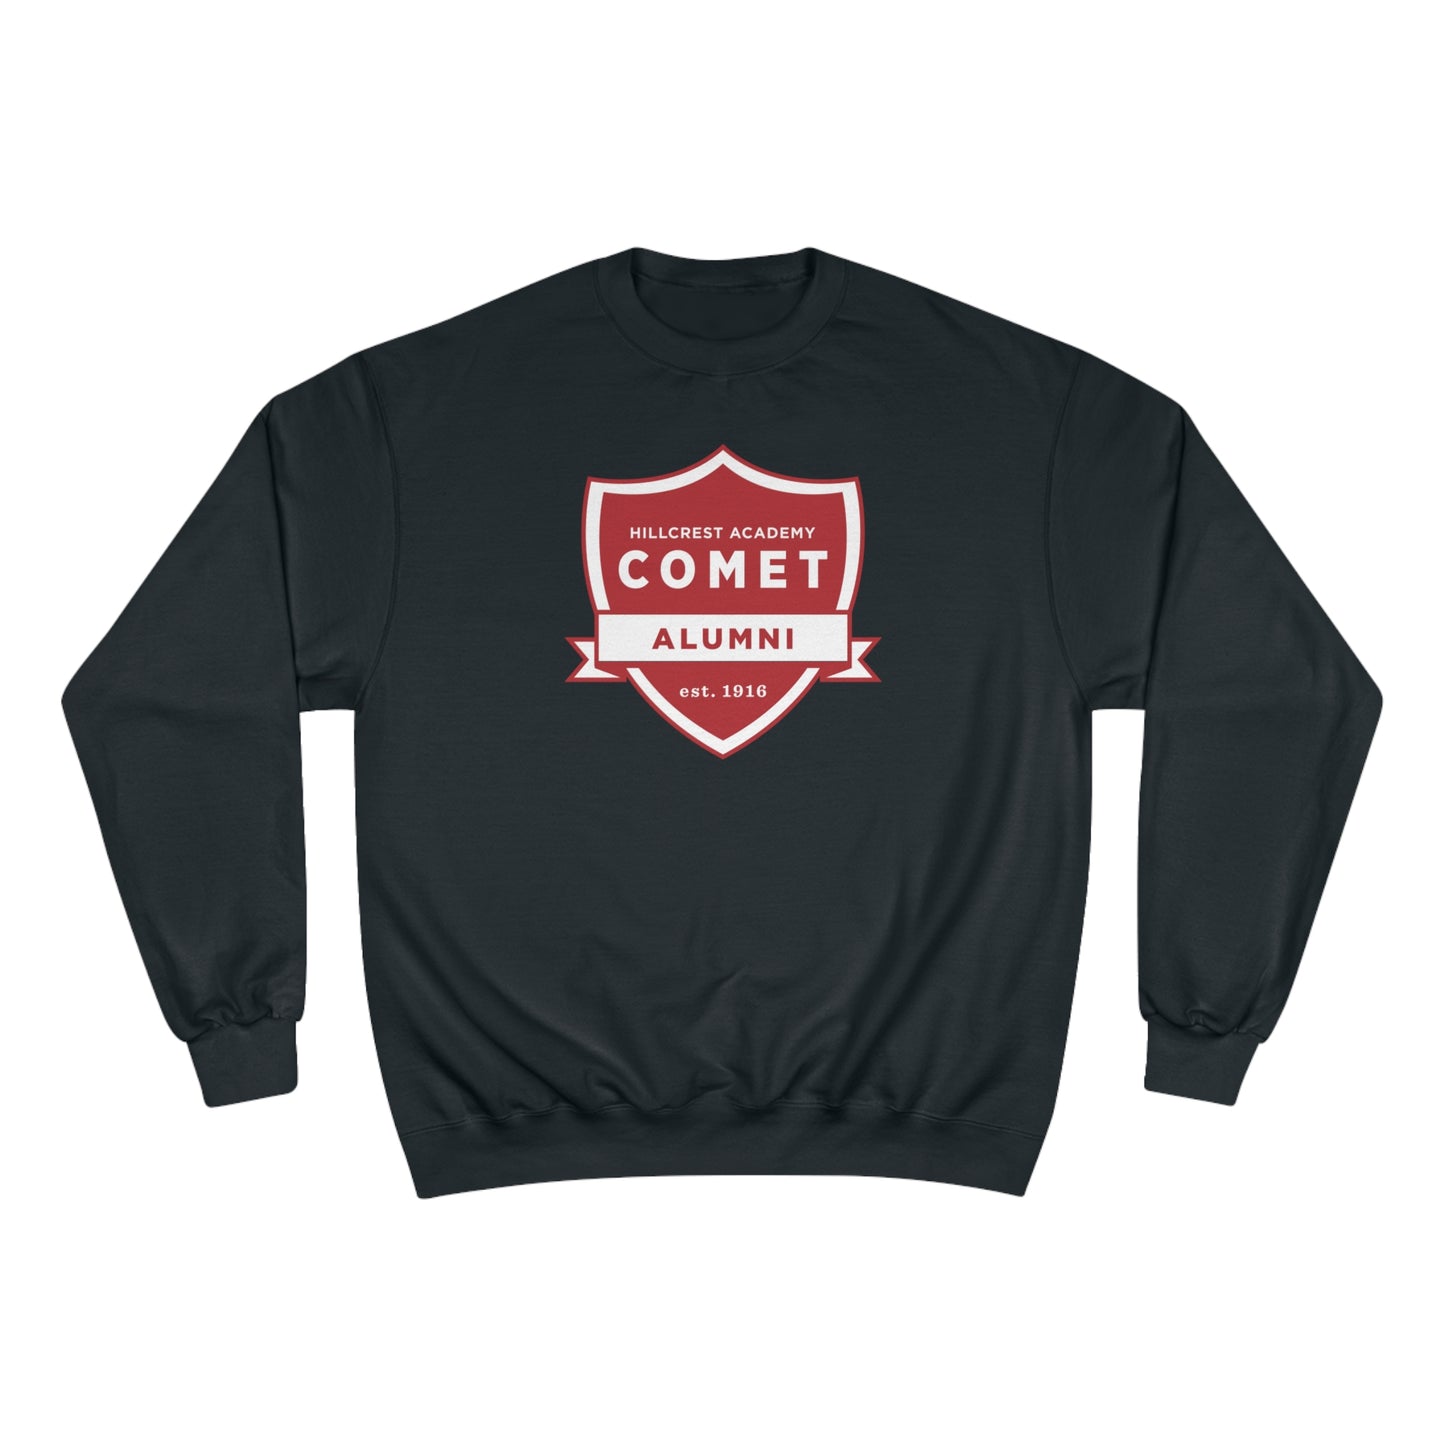 Comet Alumni - Champion Sweatshirt